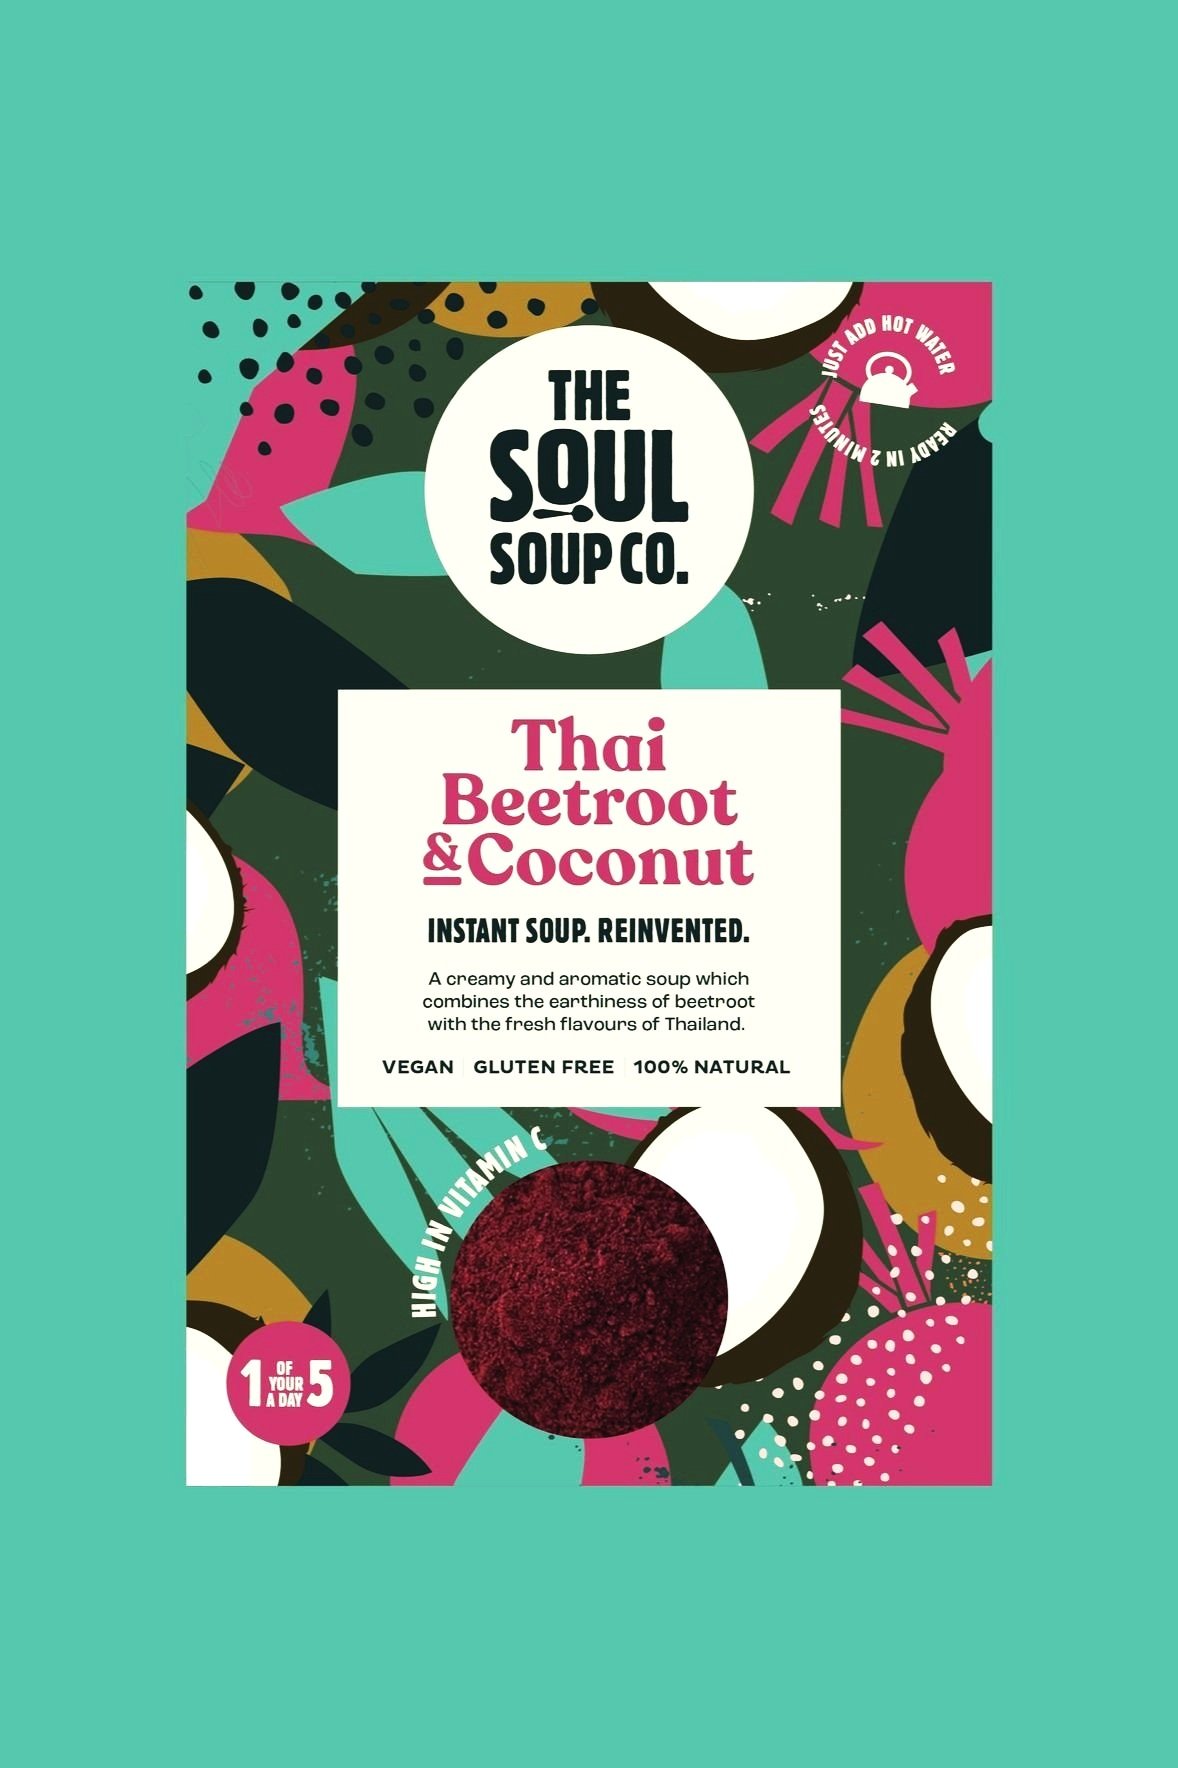 Packaging and design. Soul Soup Co label design - bright illustrations and logo design